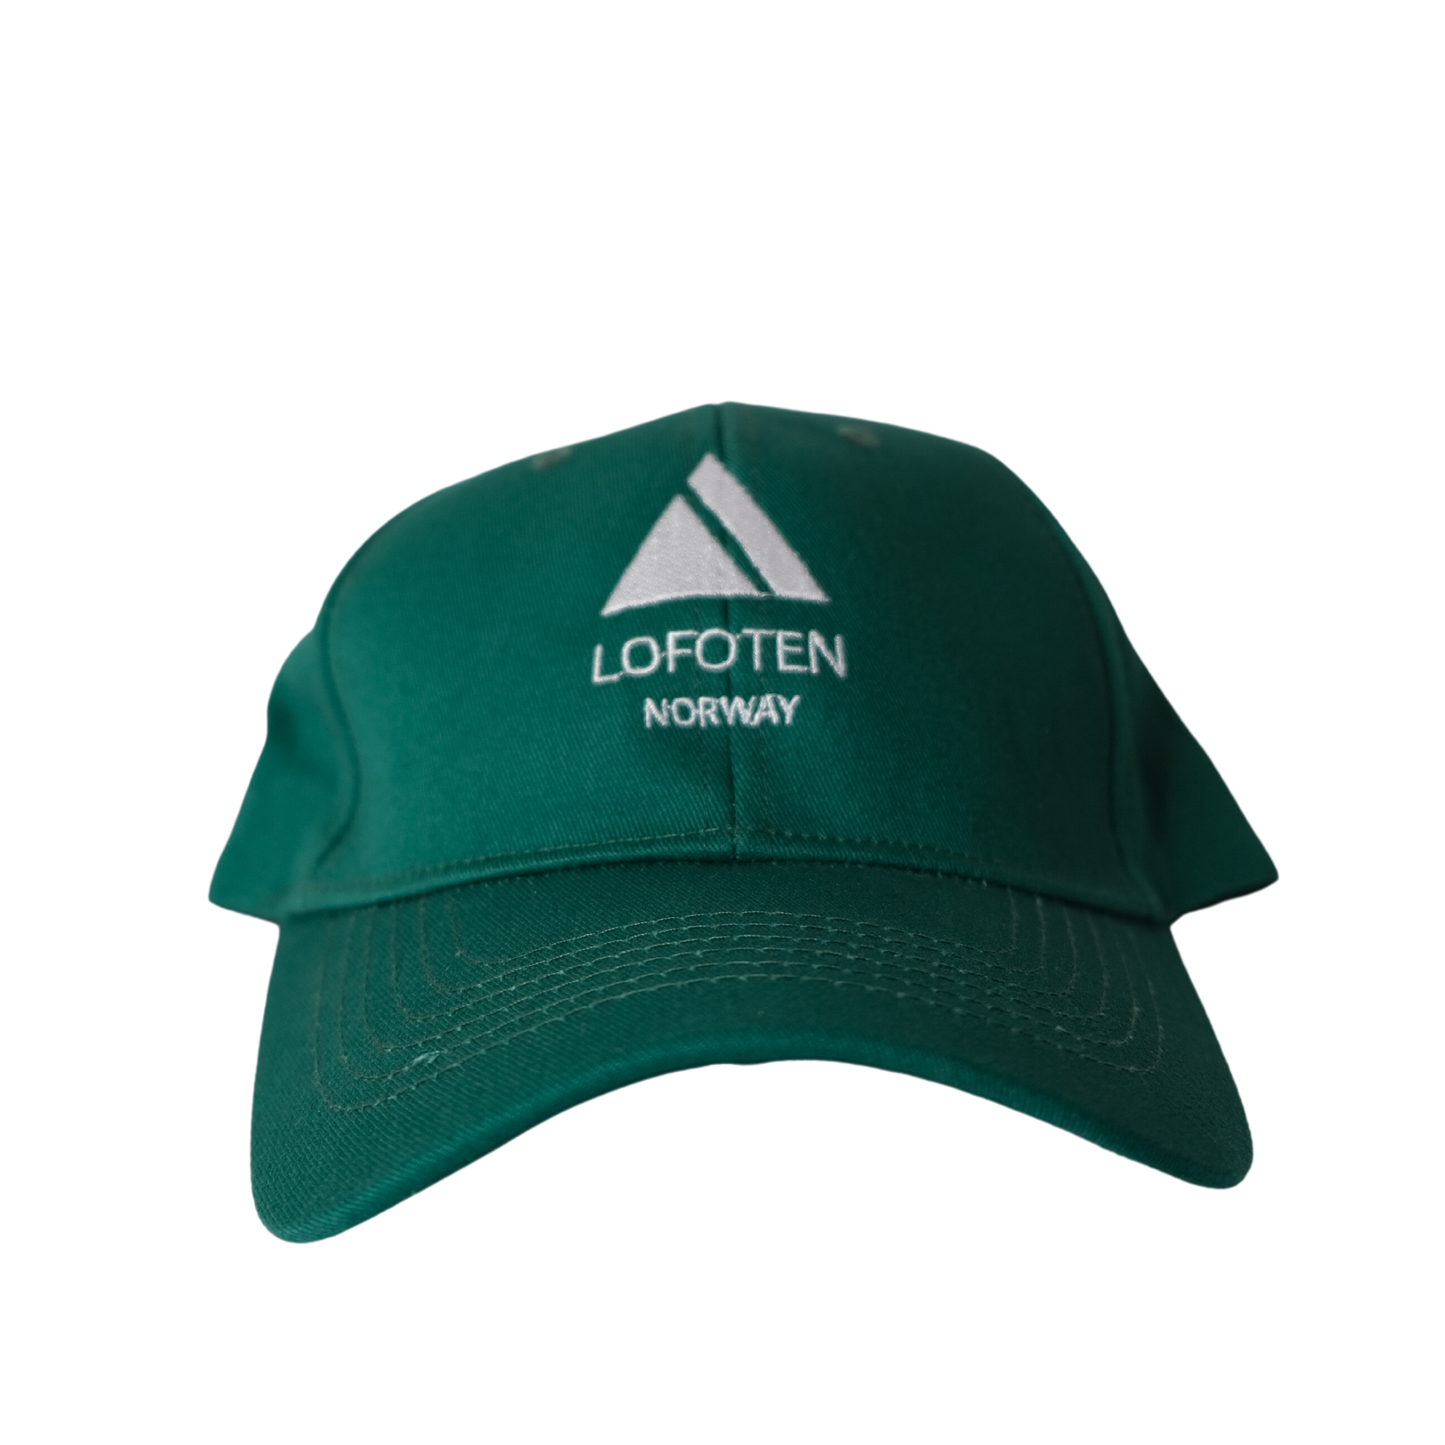 Lofoten cap, green